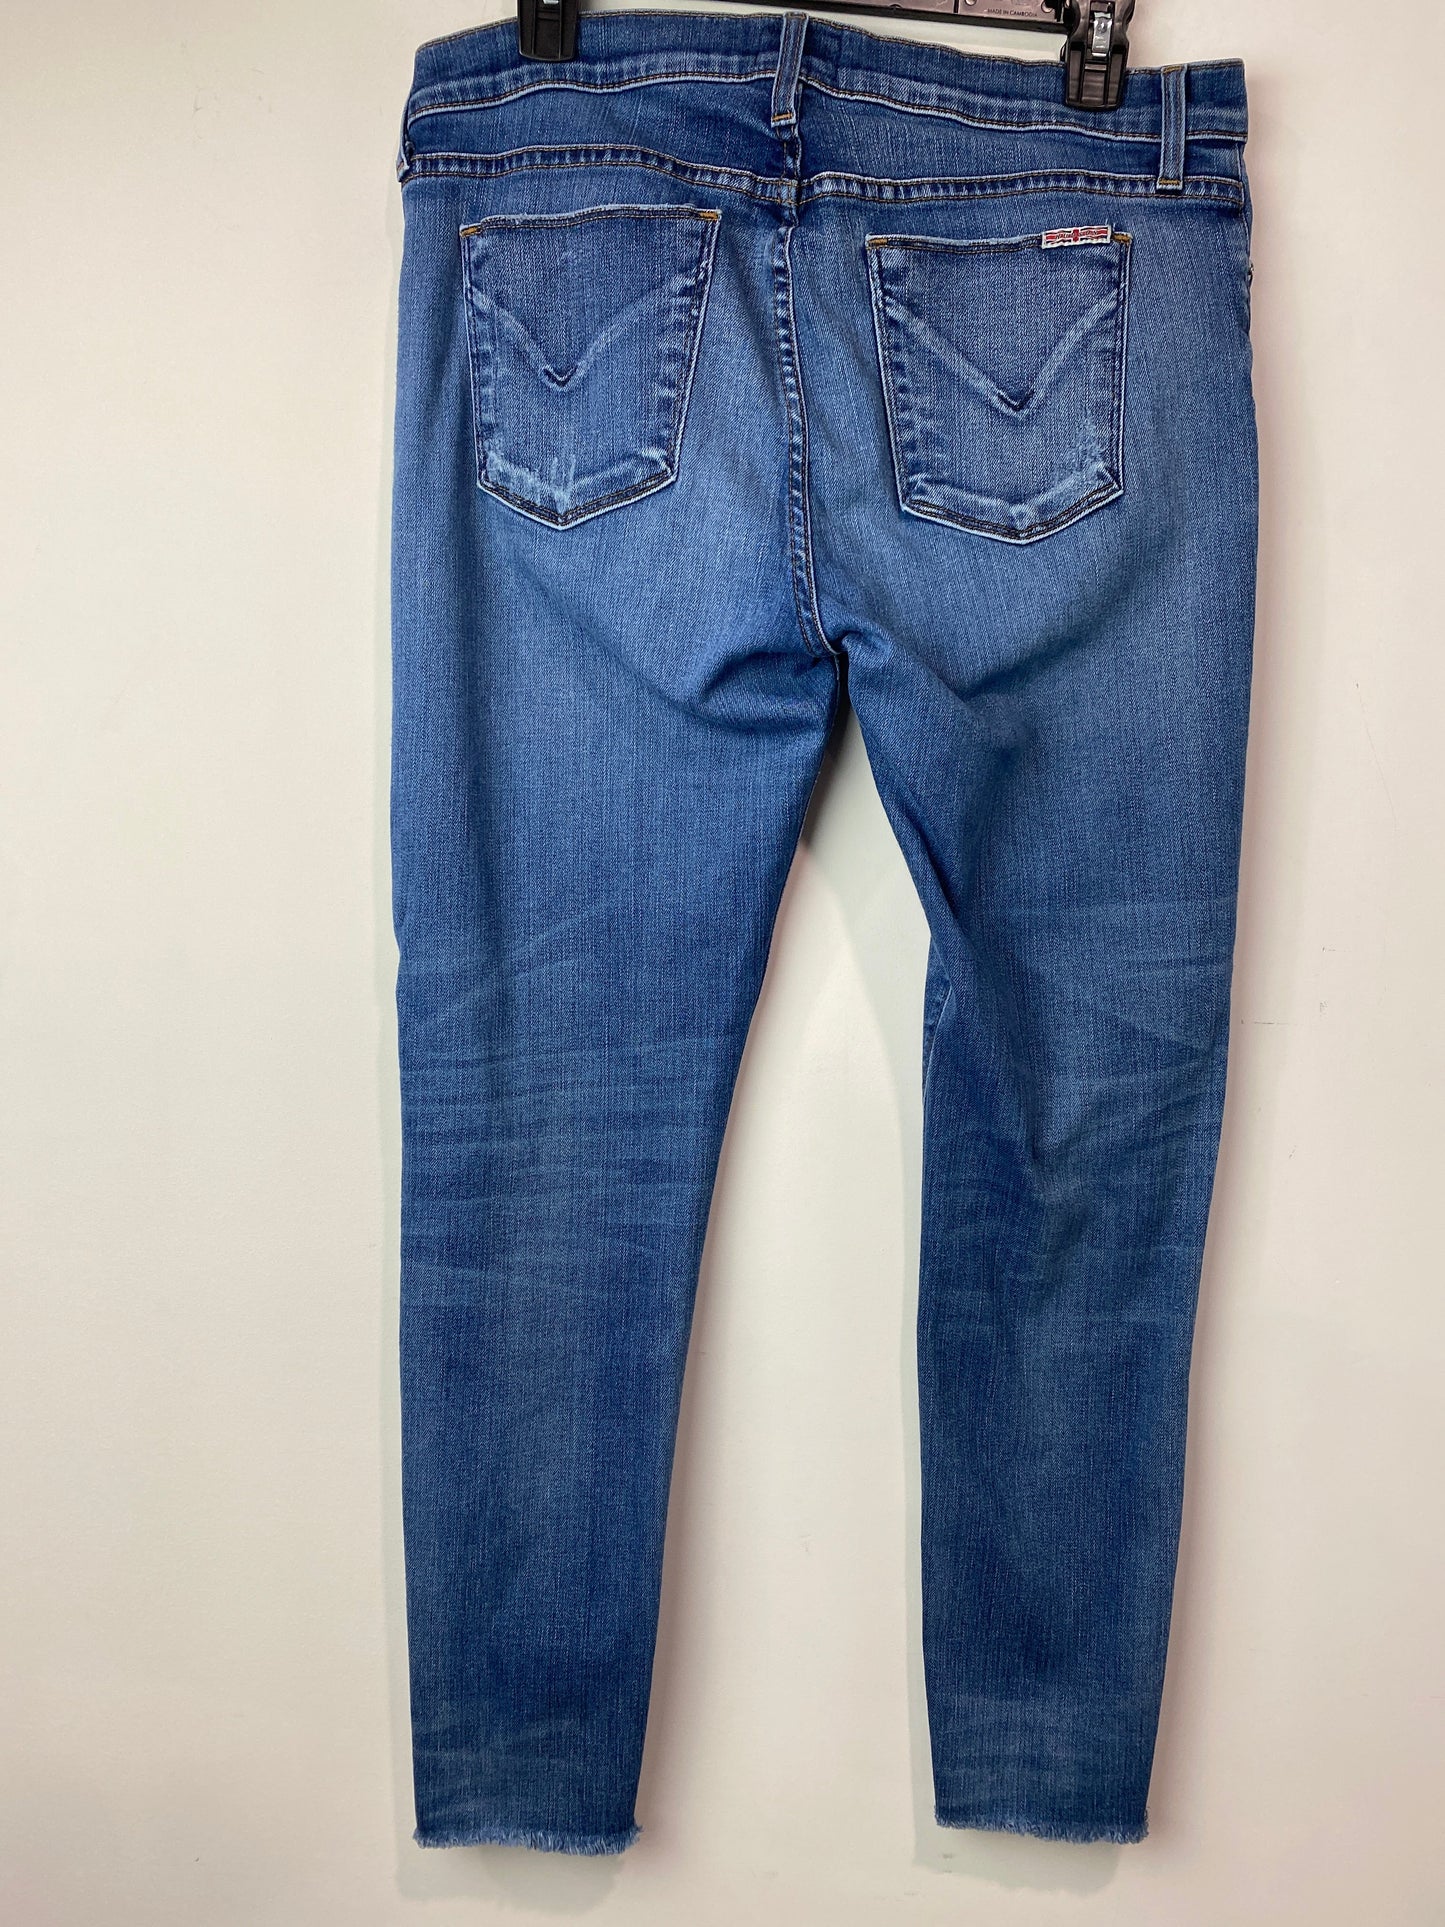 Jeans Skinny By Hudson  Size: 12